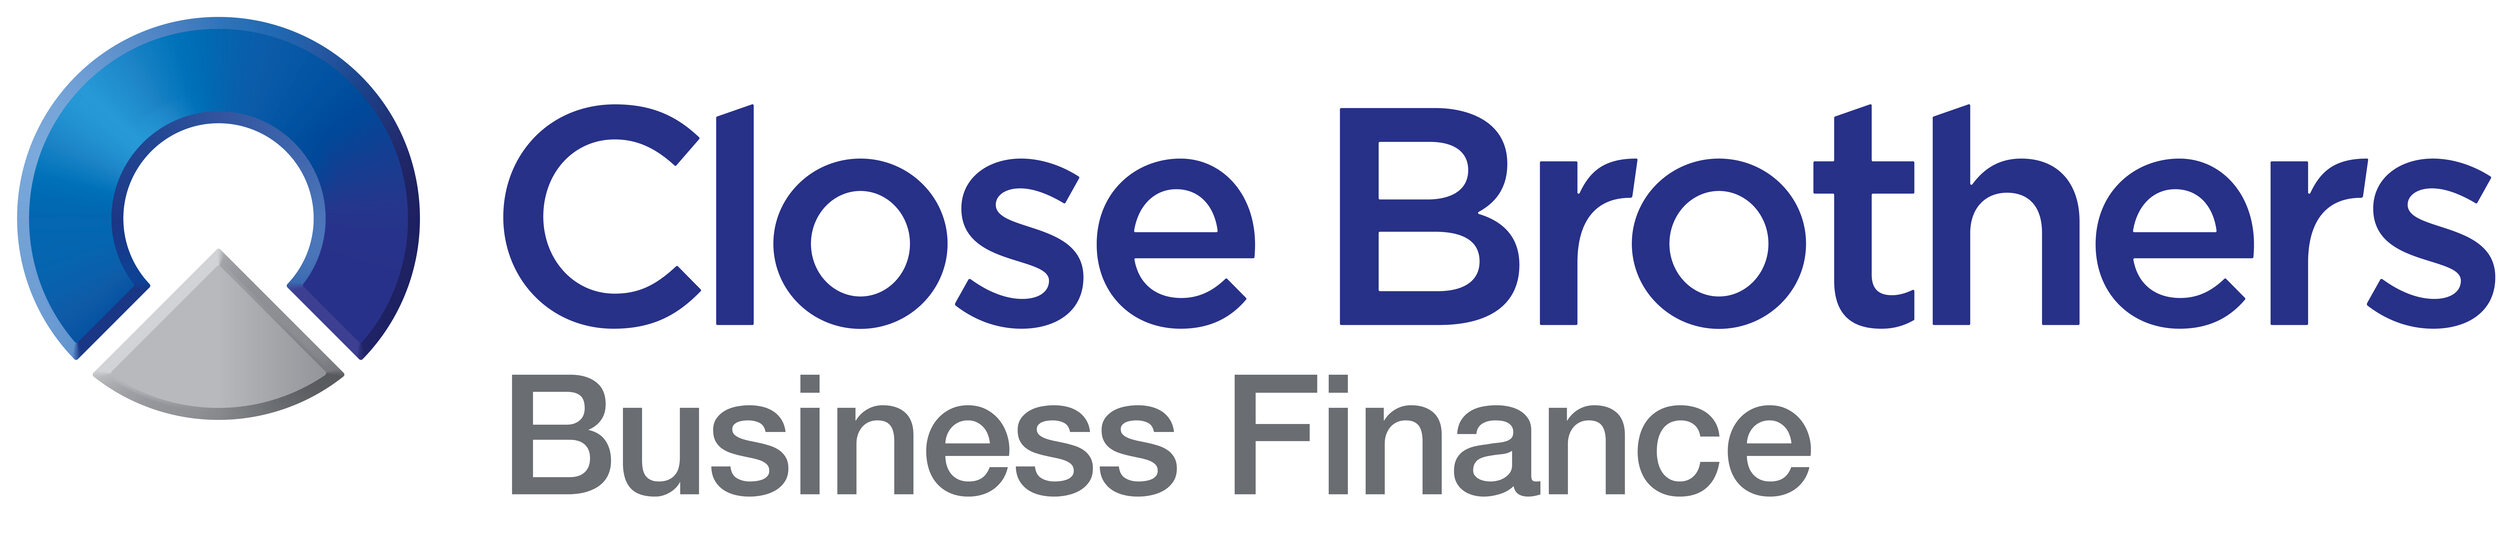 Close Brothers_Business Finance_BD RGB logo.jpg